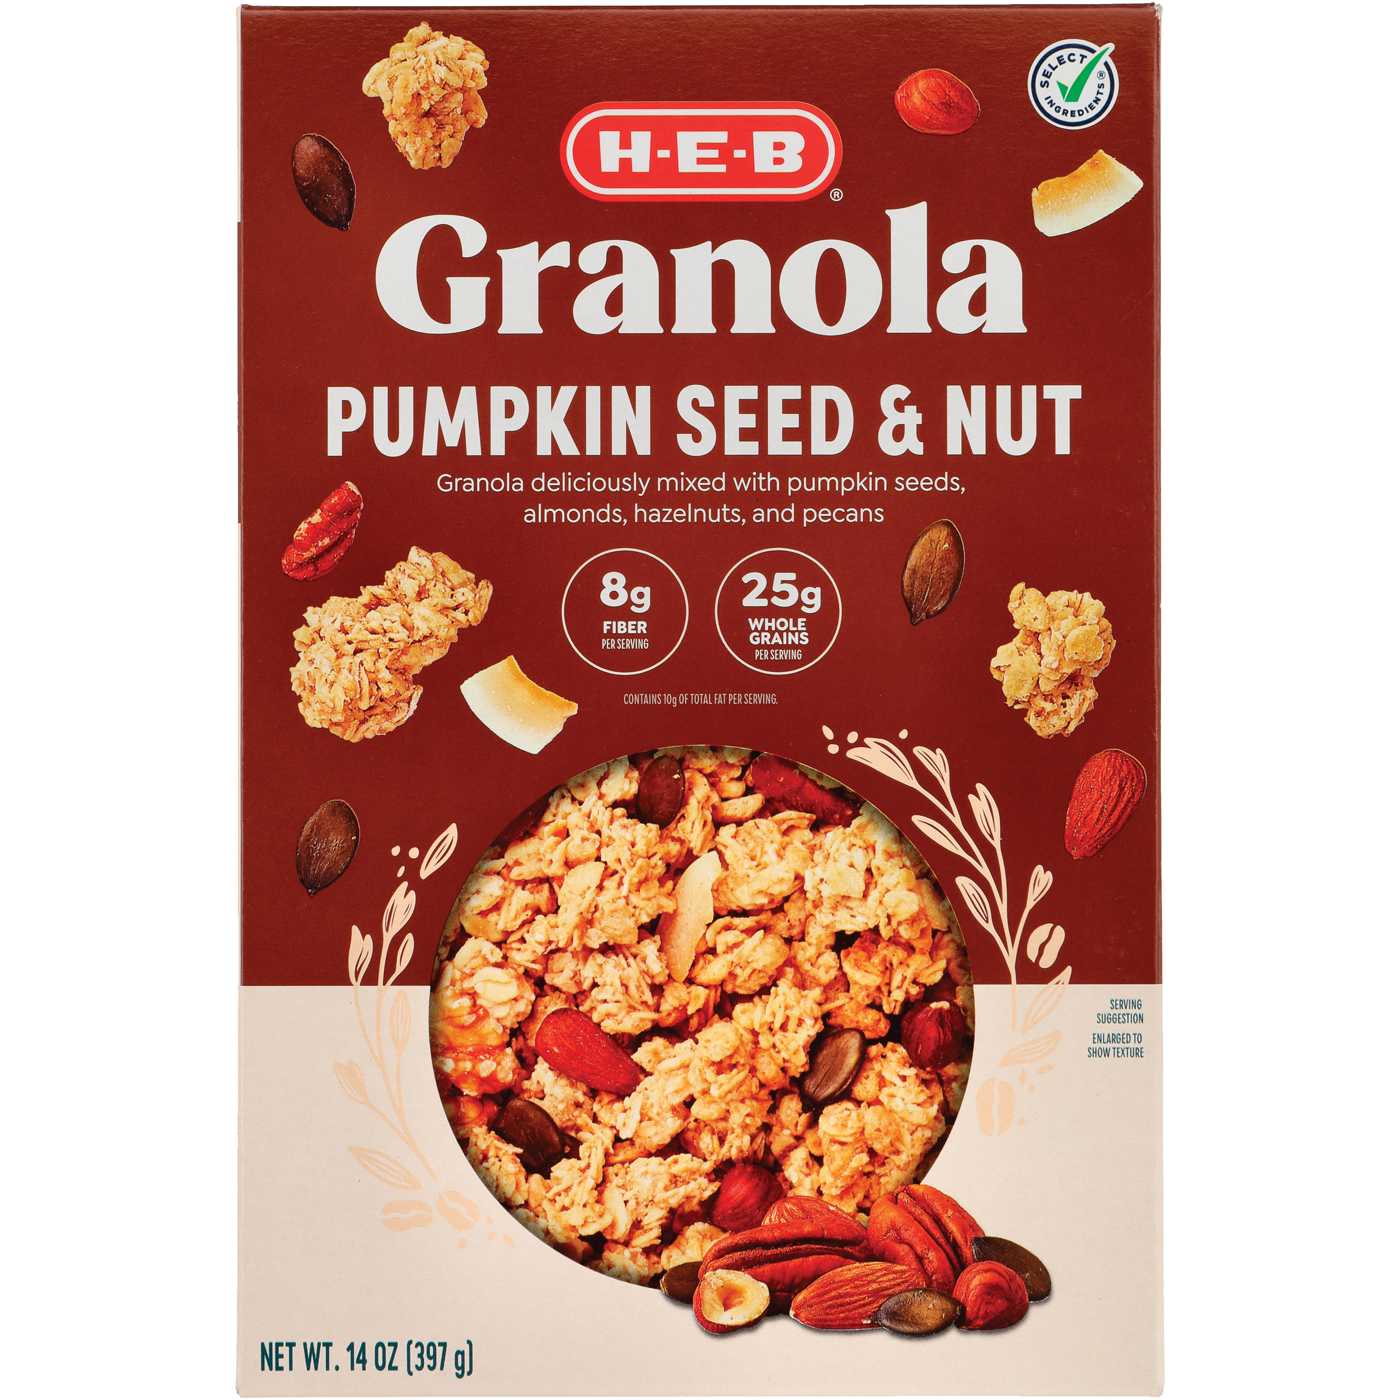 H-E-B Granola - Pumpkin Seed & Nut; image 1 of 2